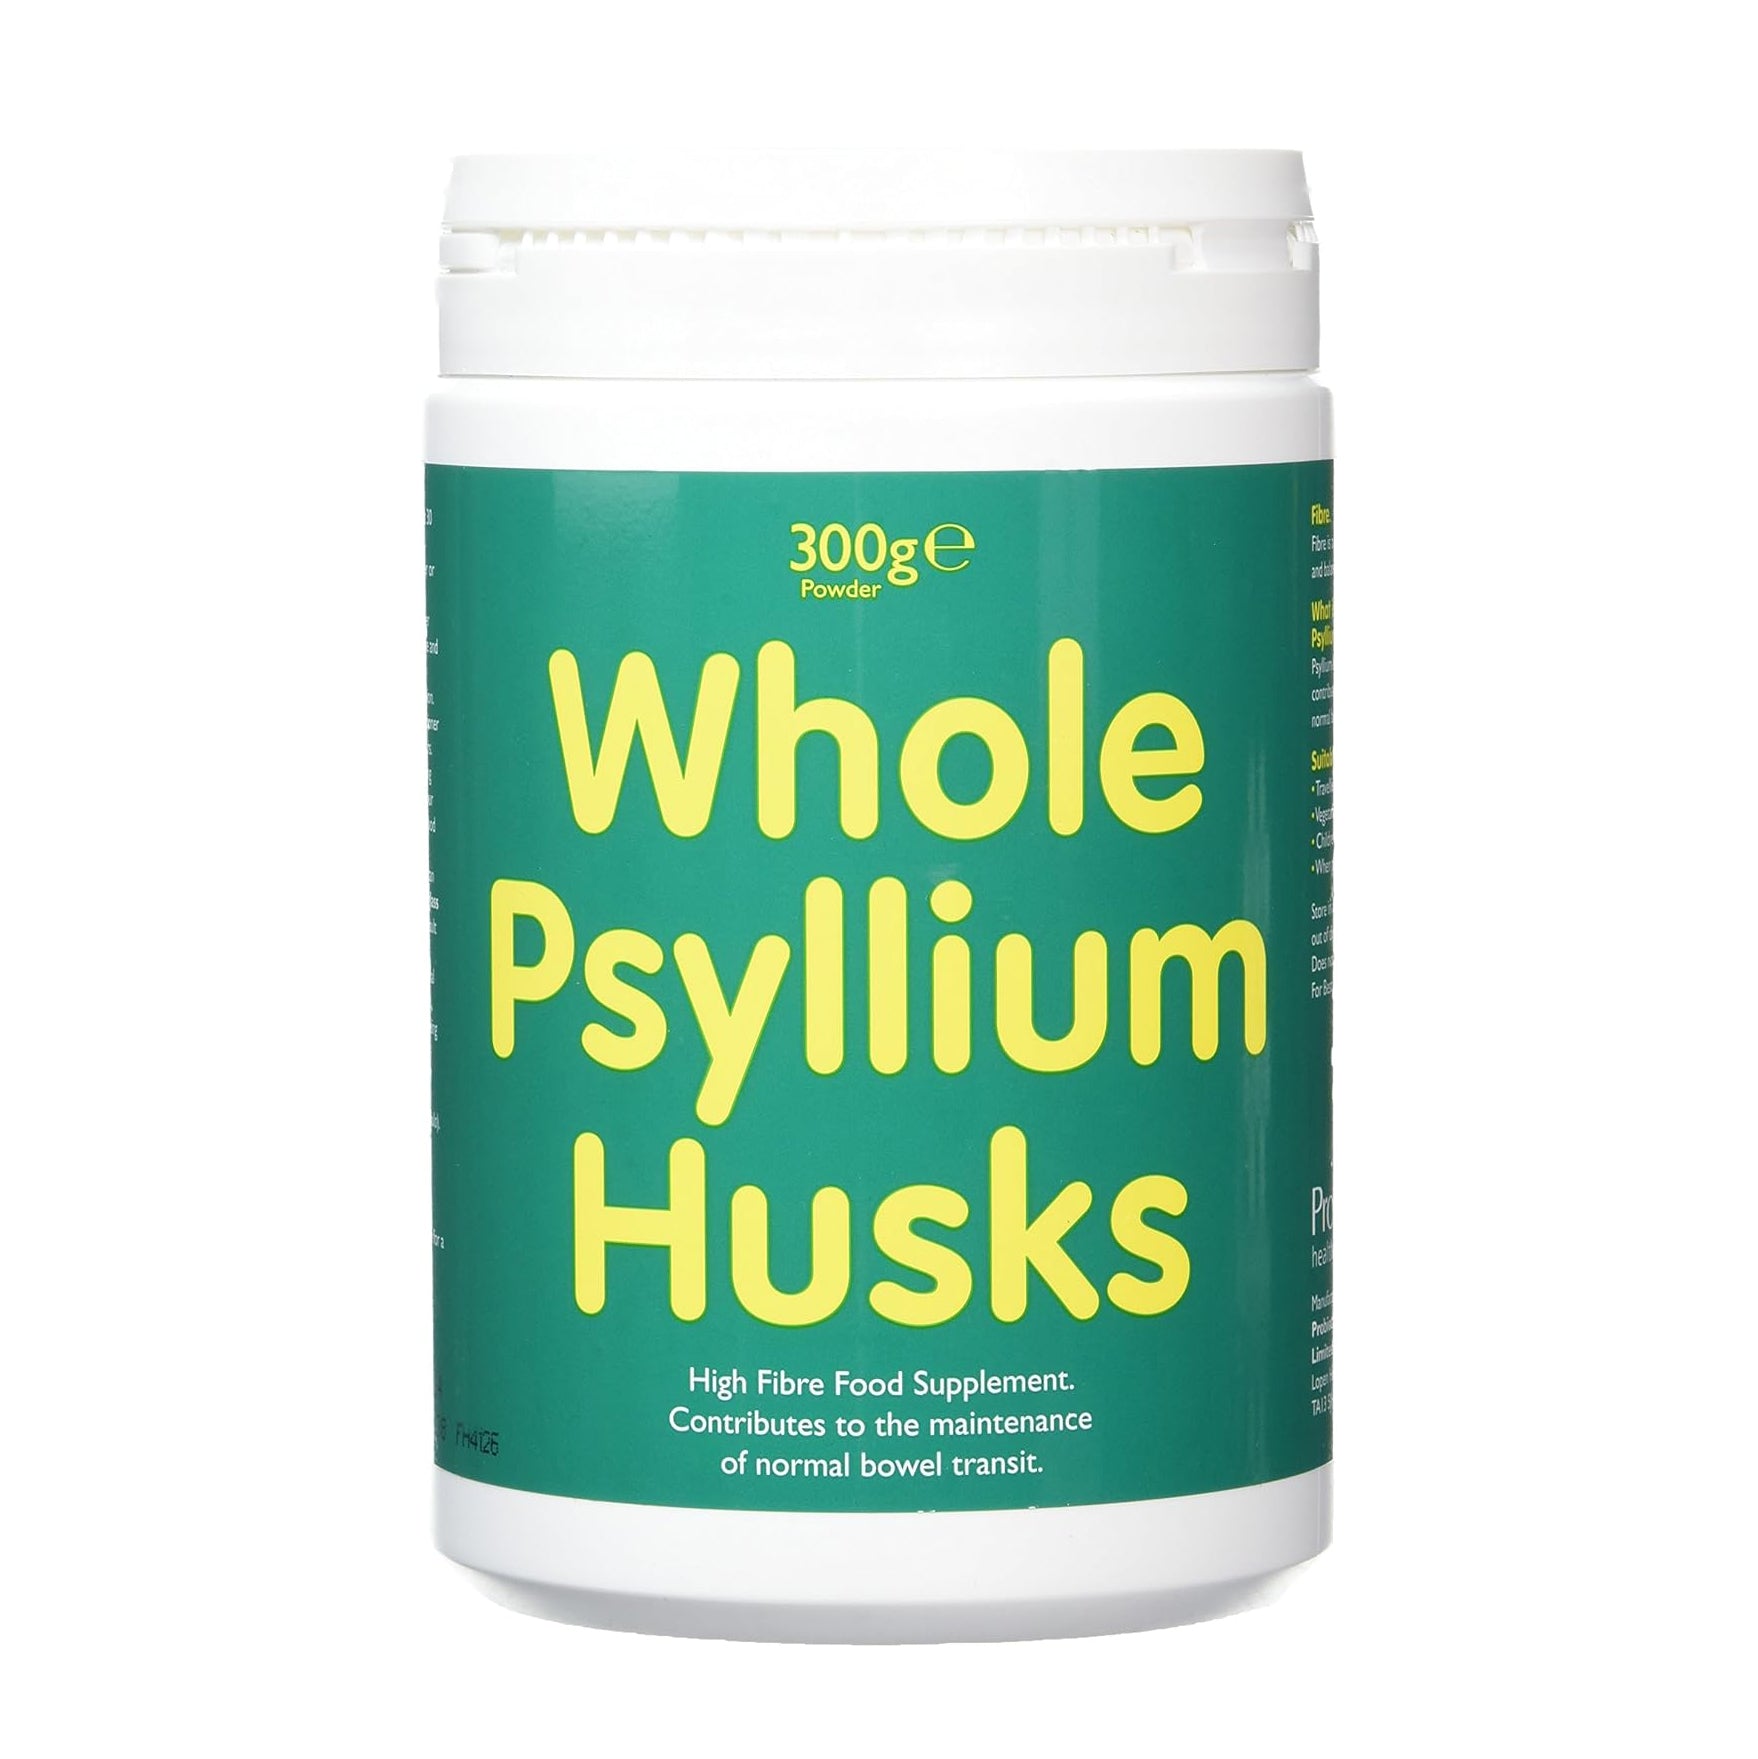 Psyllium Husks Whole Powder 300g